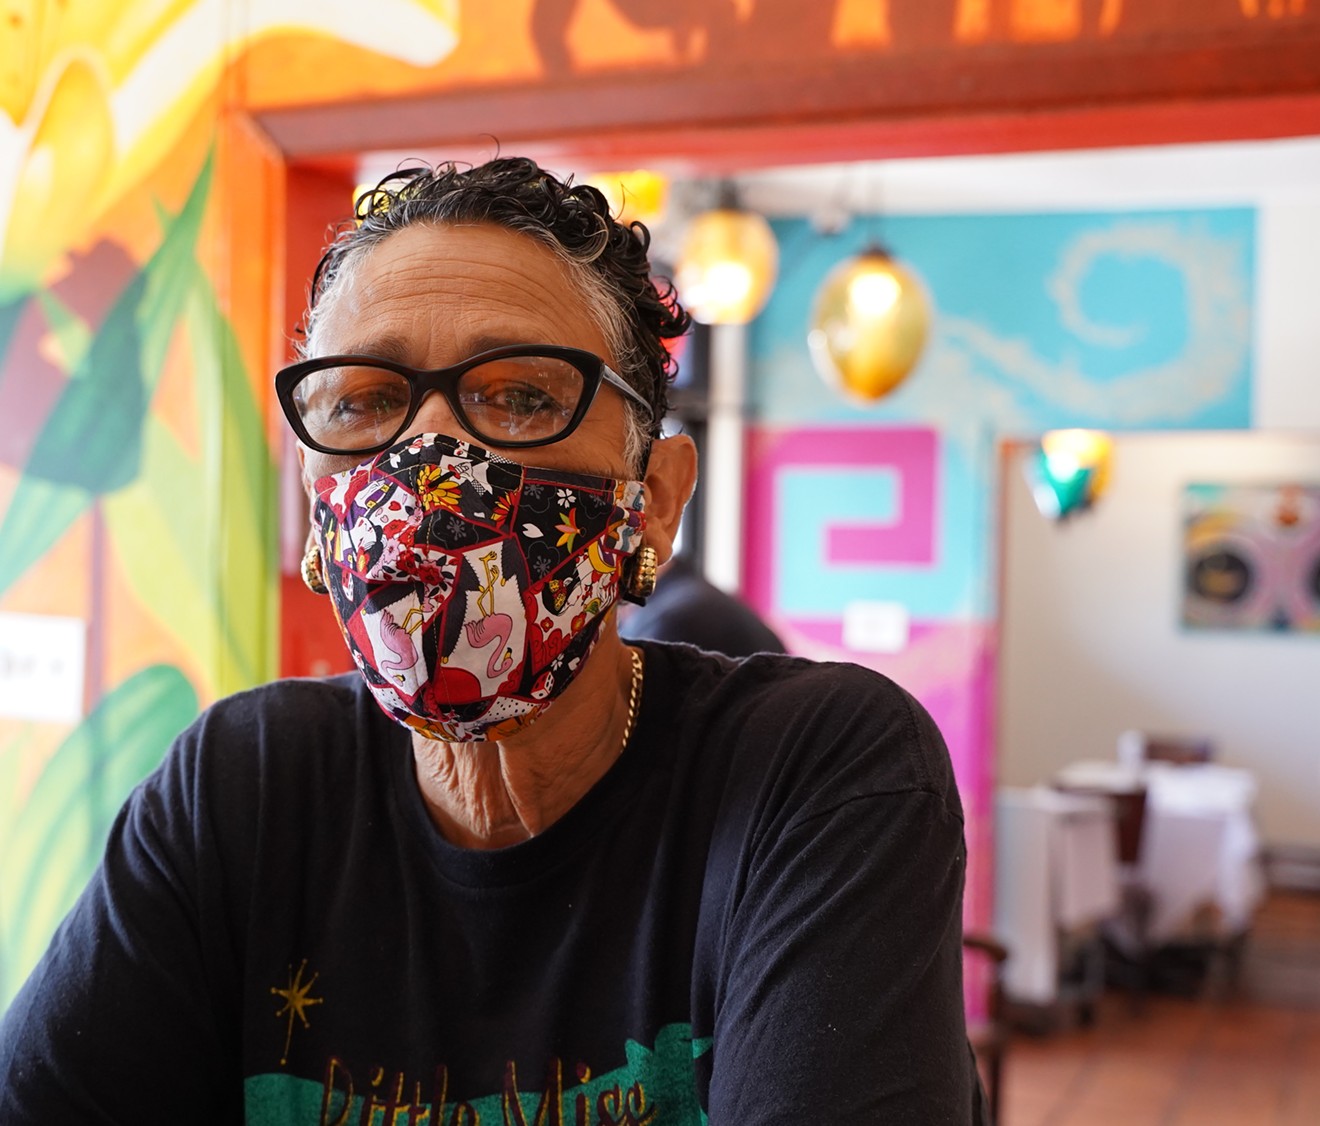 Chef Silvana Salcido Esparza surrounded by art inside Barrio Cafe.